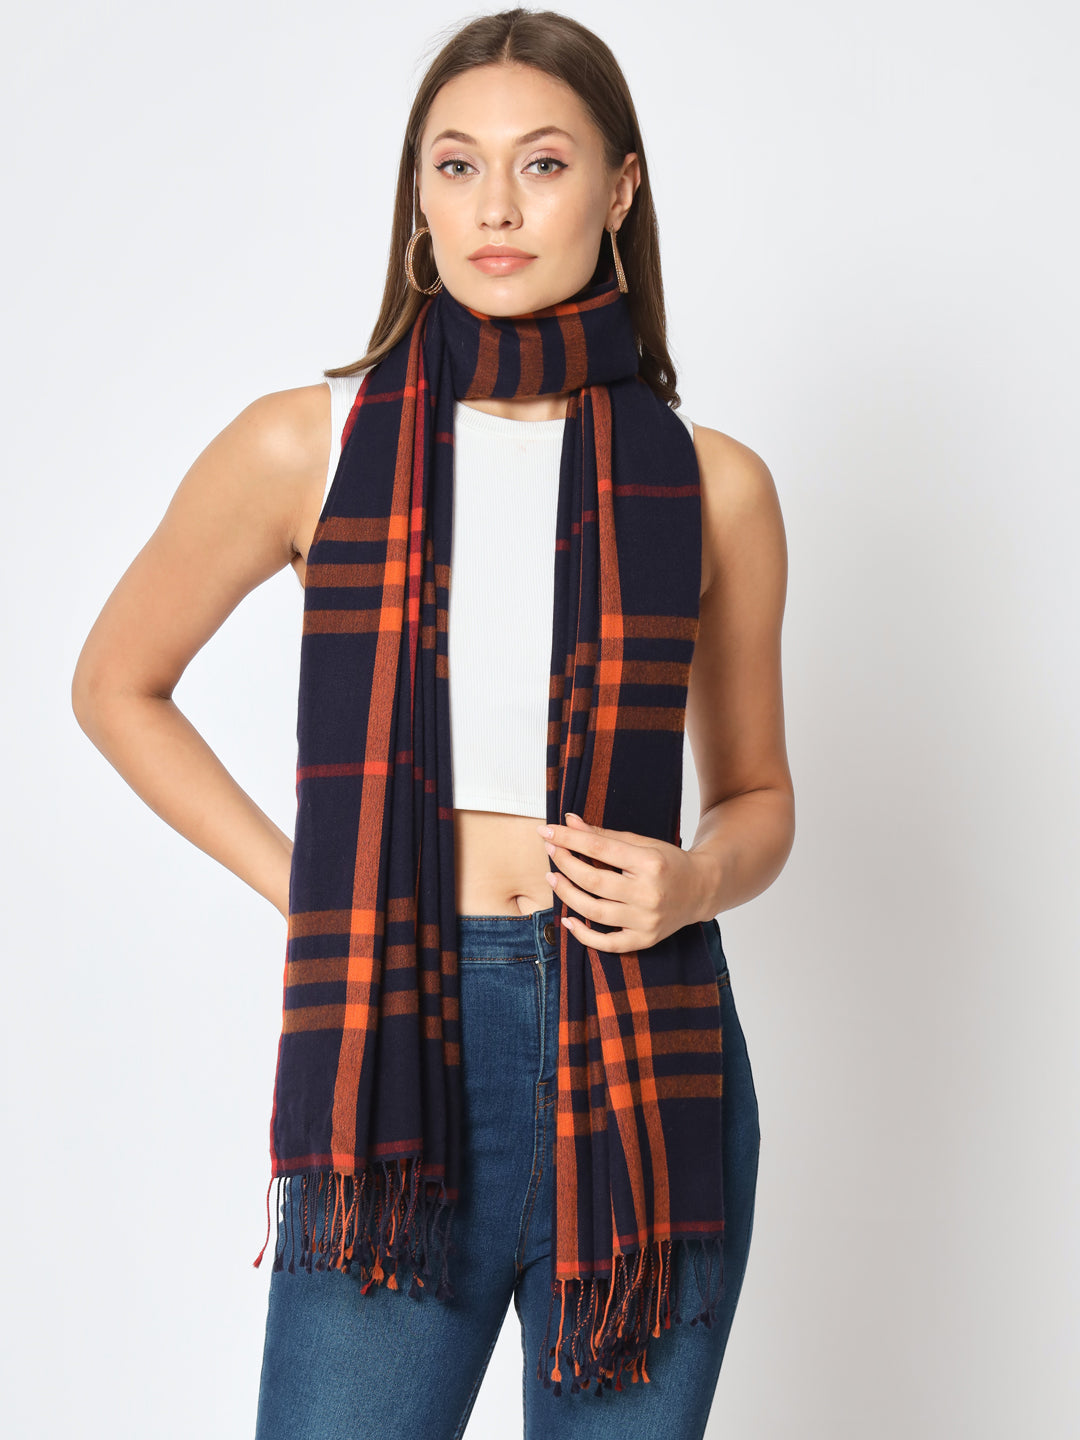 kashmiri shawl price, cashmere scarves